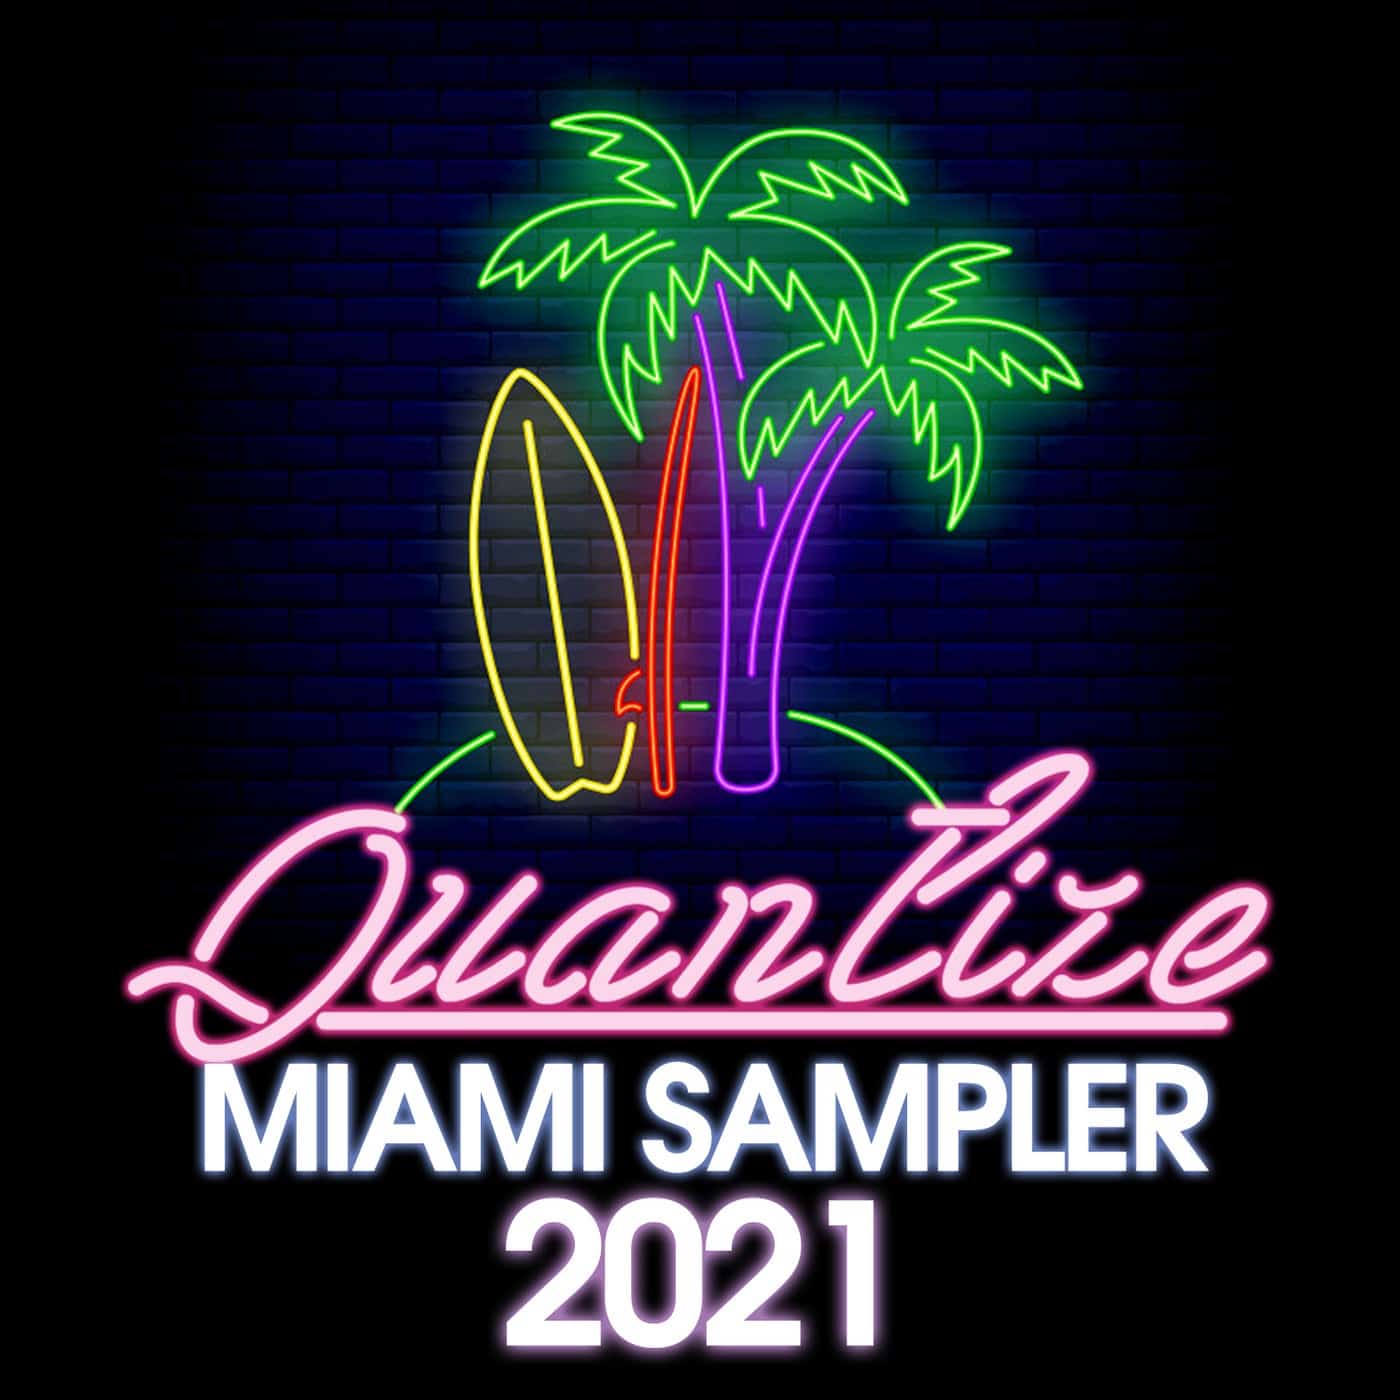 Download VA - Quantize Miami Sampler 2021 - Compiled By DJ Spen on Electrobuzz